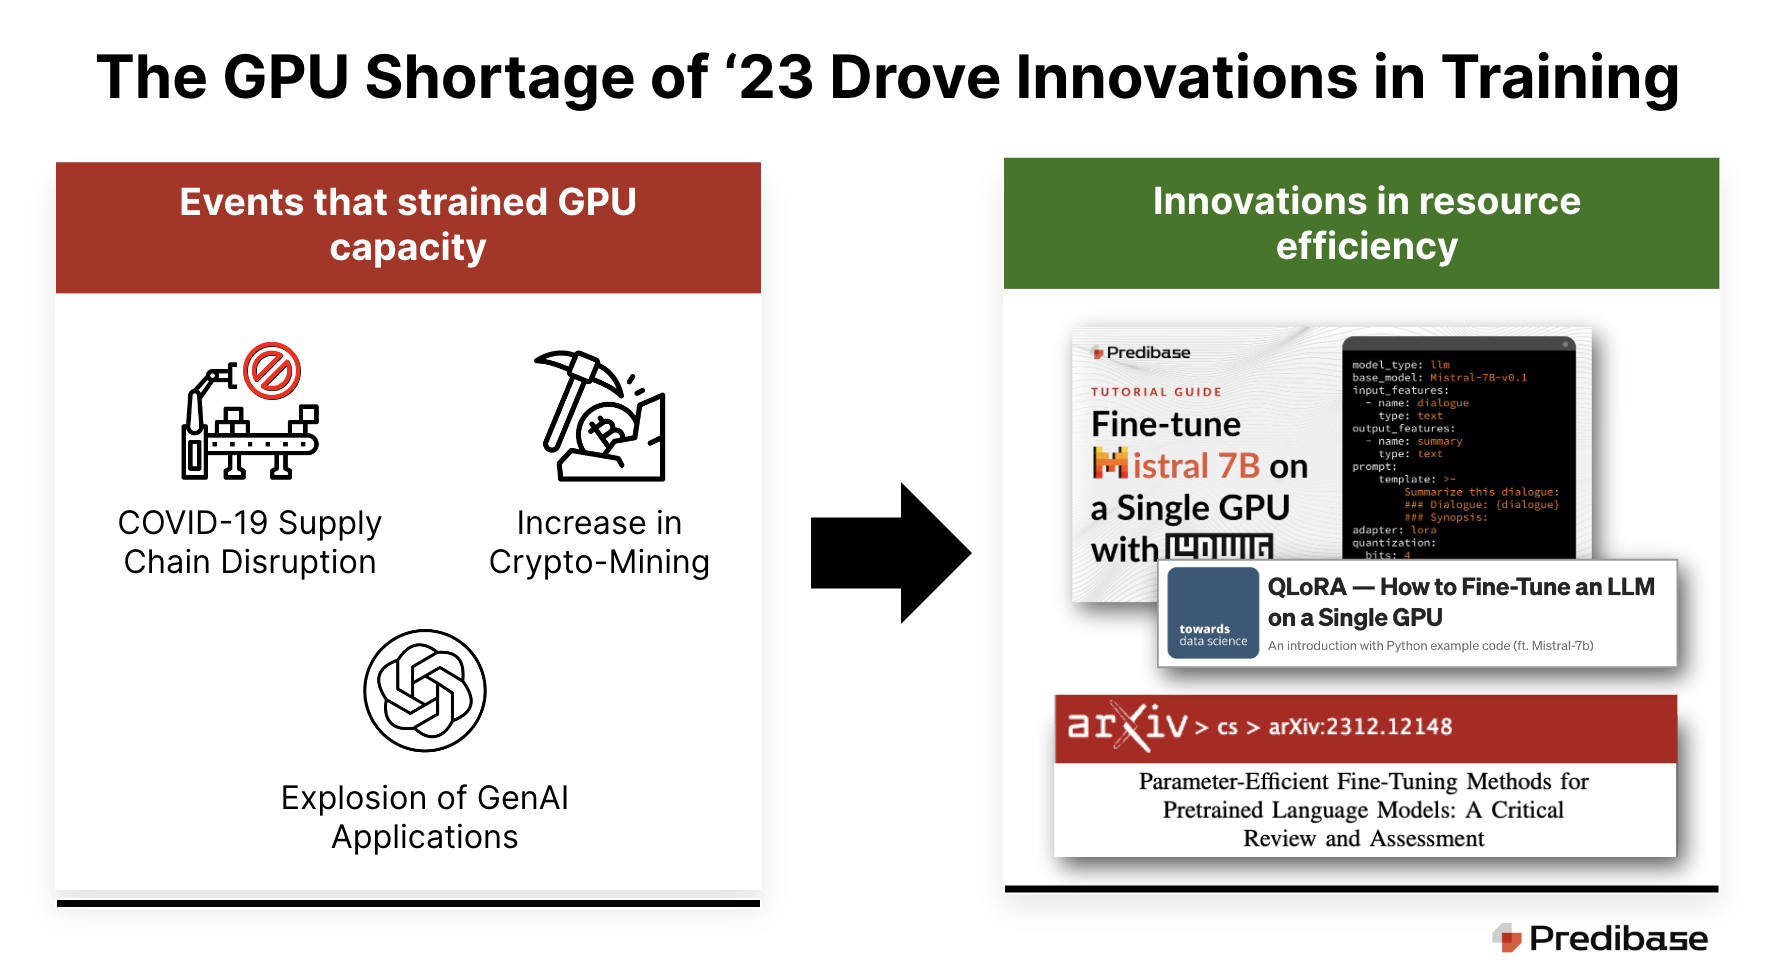 GPU shortage drove innovations in model training efficiency